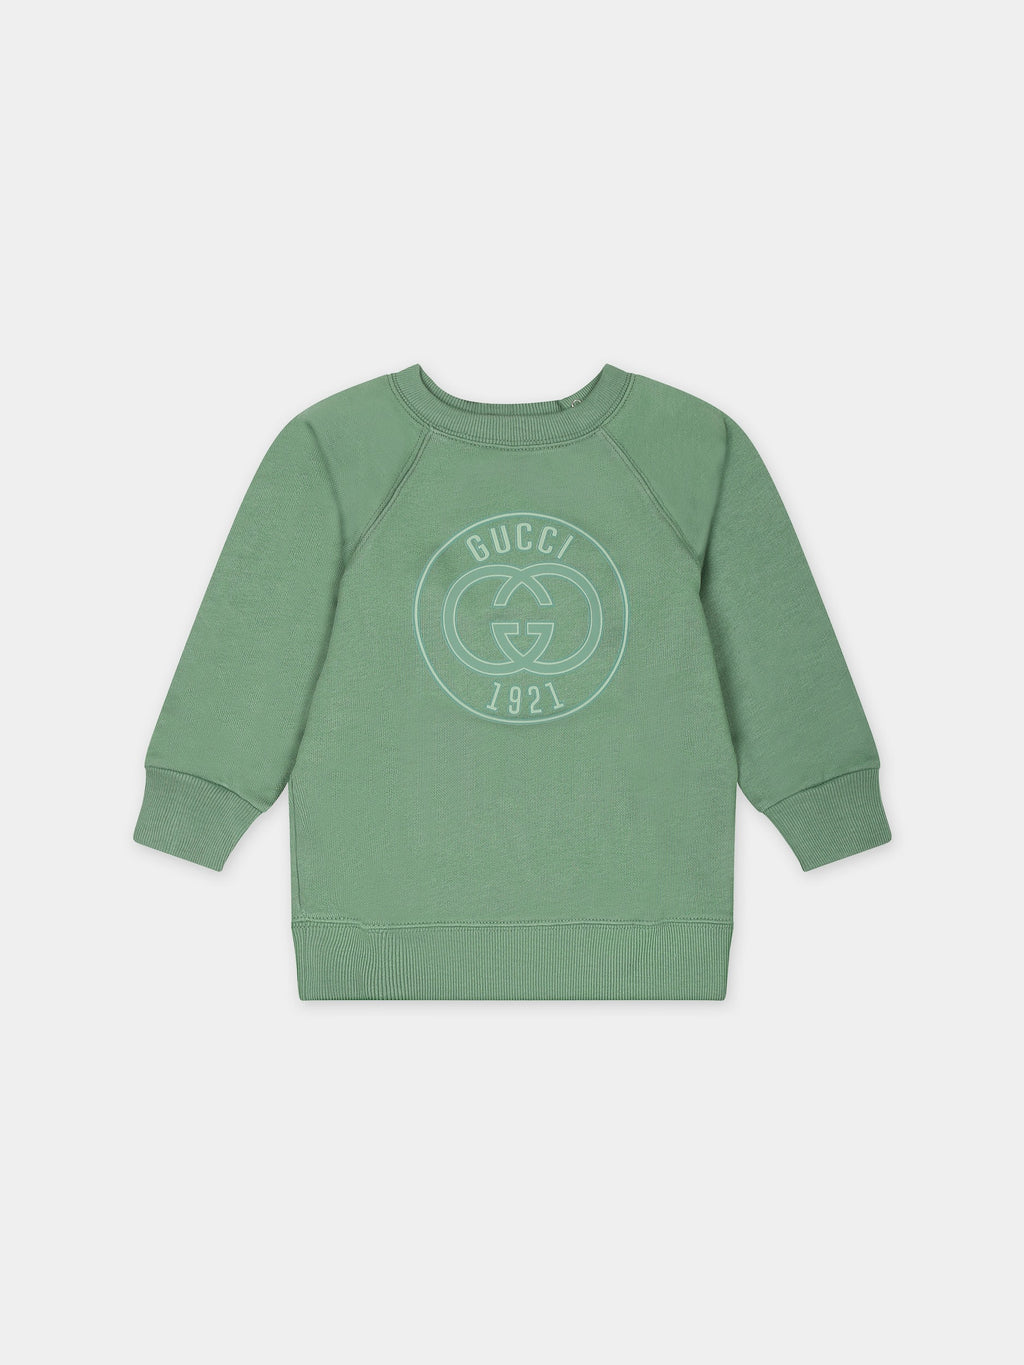 Green sweatshirt for babykids with logo Gucci 1921